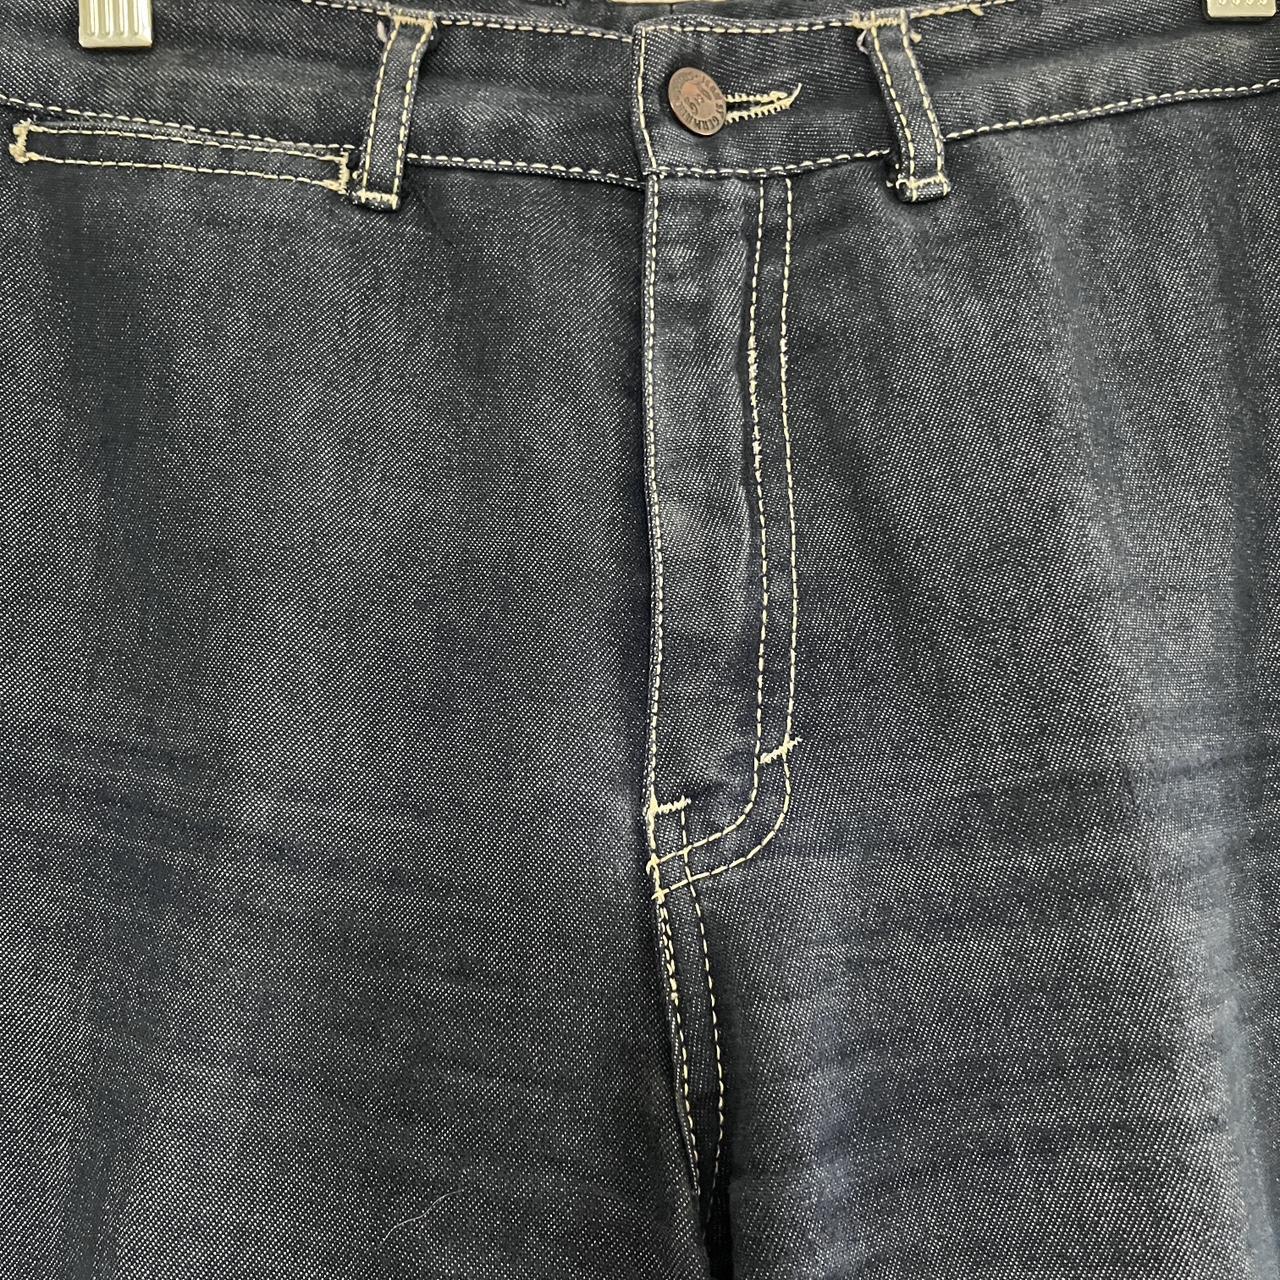 Jean St. Germain / straight leg jeans / no size but... - Depop